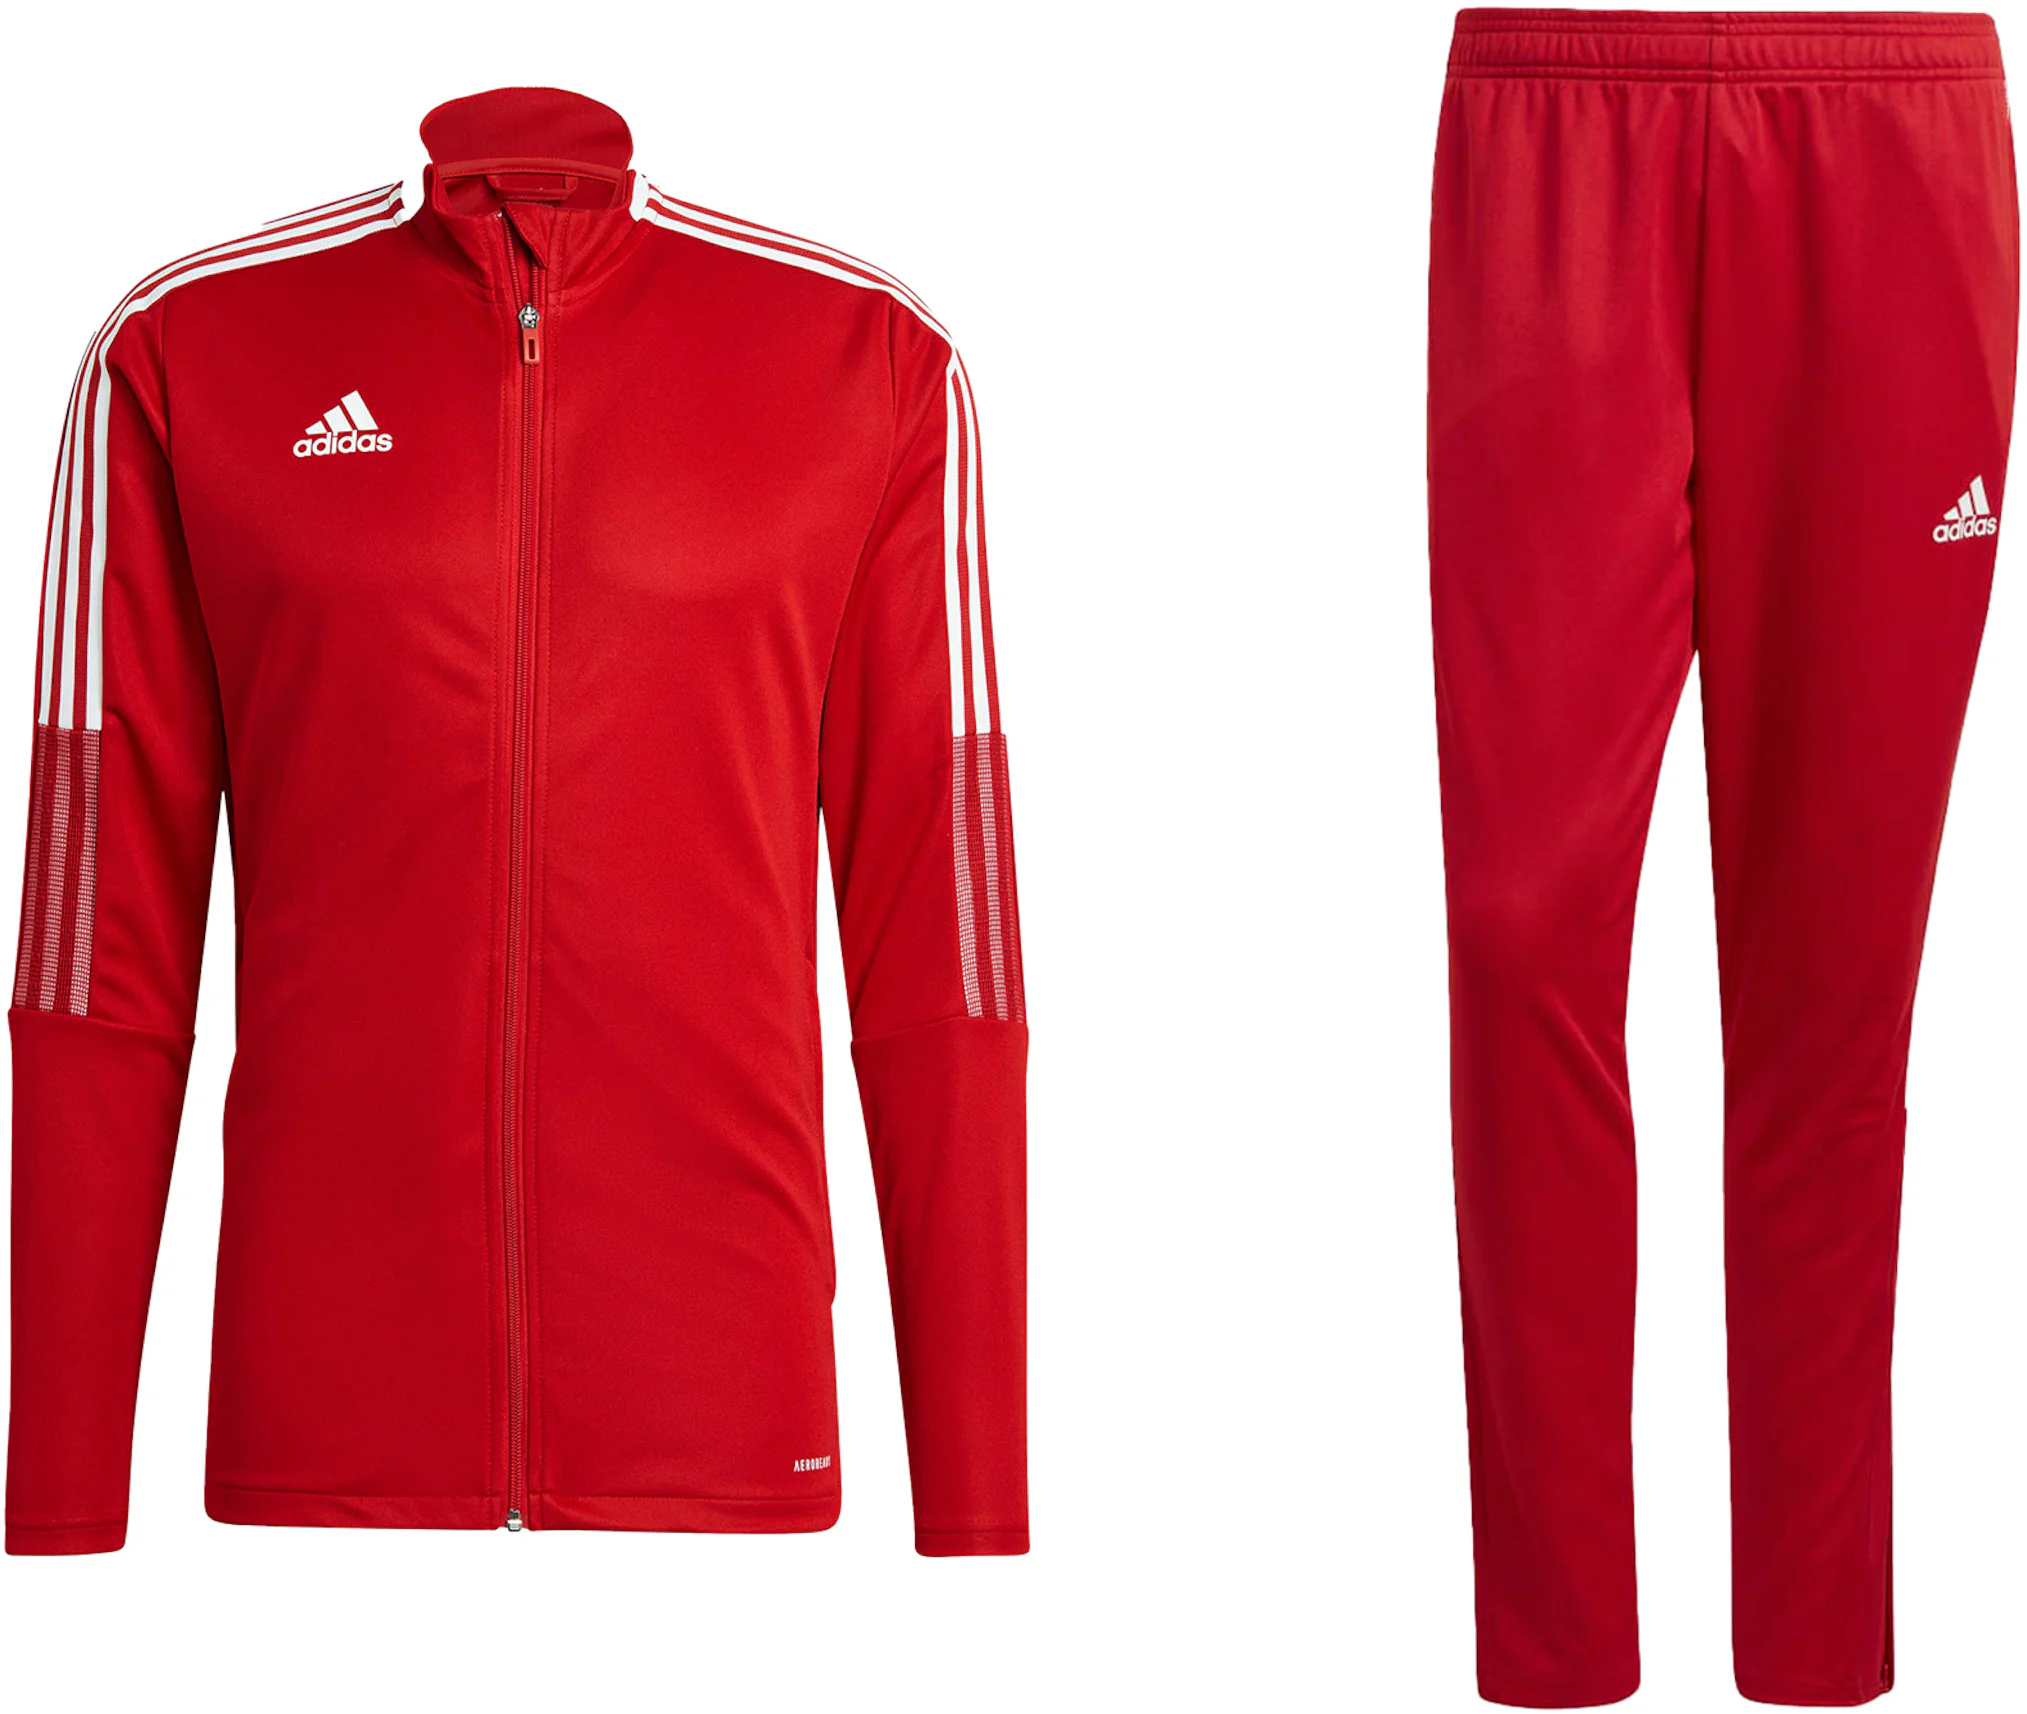 adidas Tiro 21 Track Men's Jacket - Power Red - Soccer Shop USA